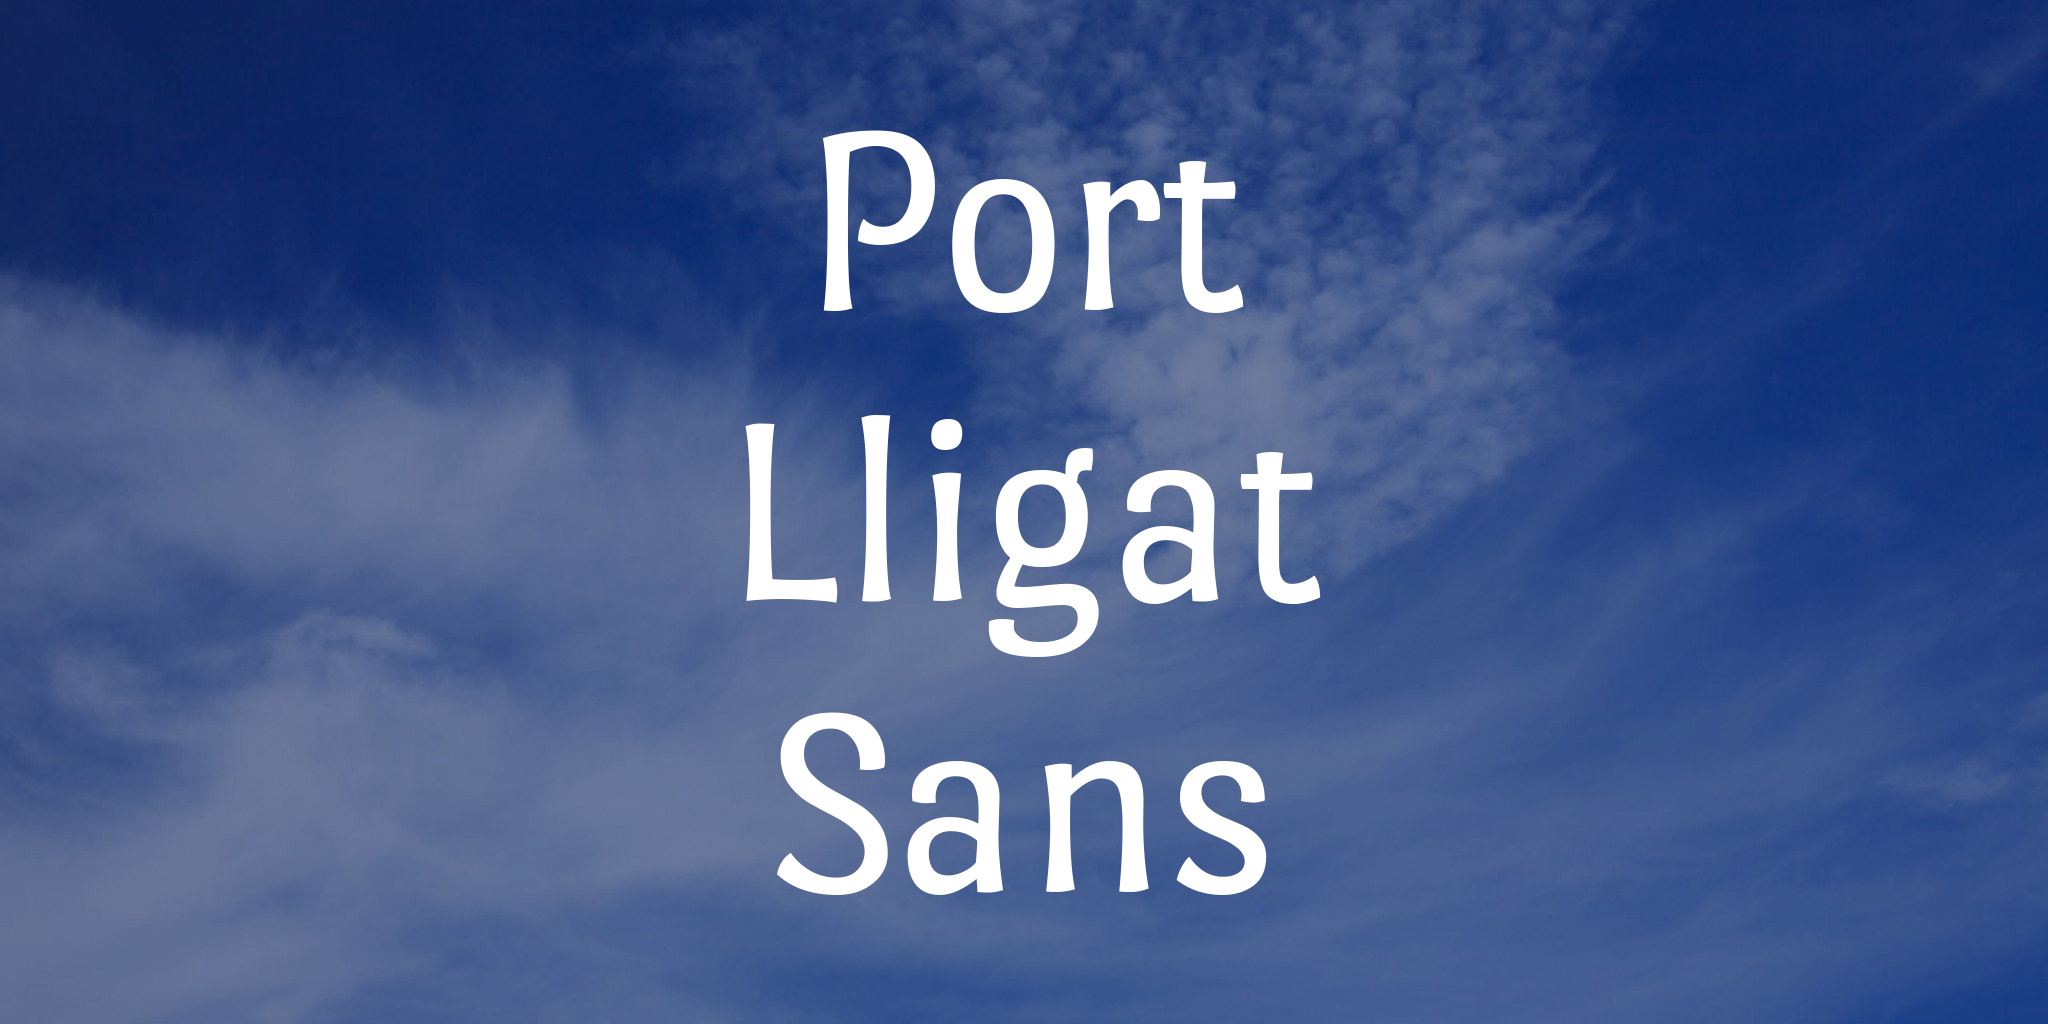 Port Lligat Sans